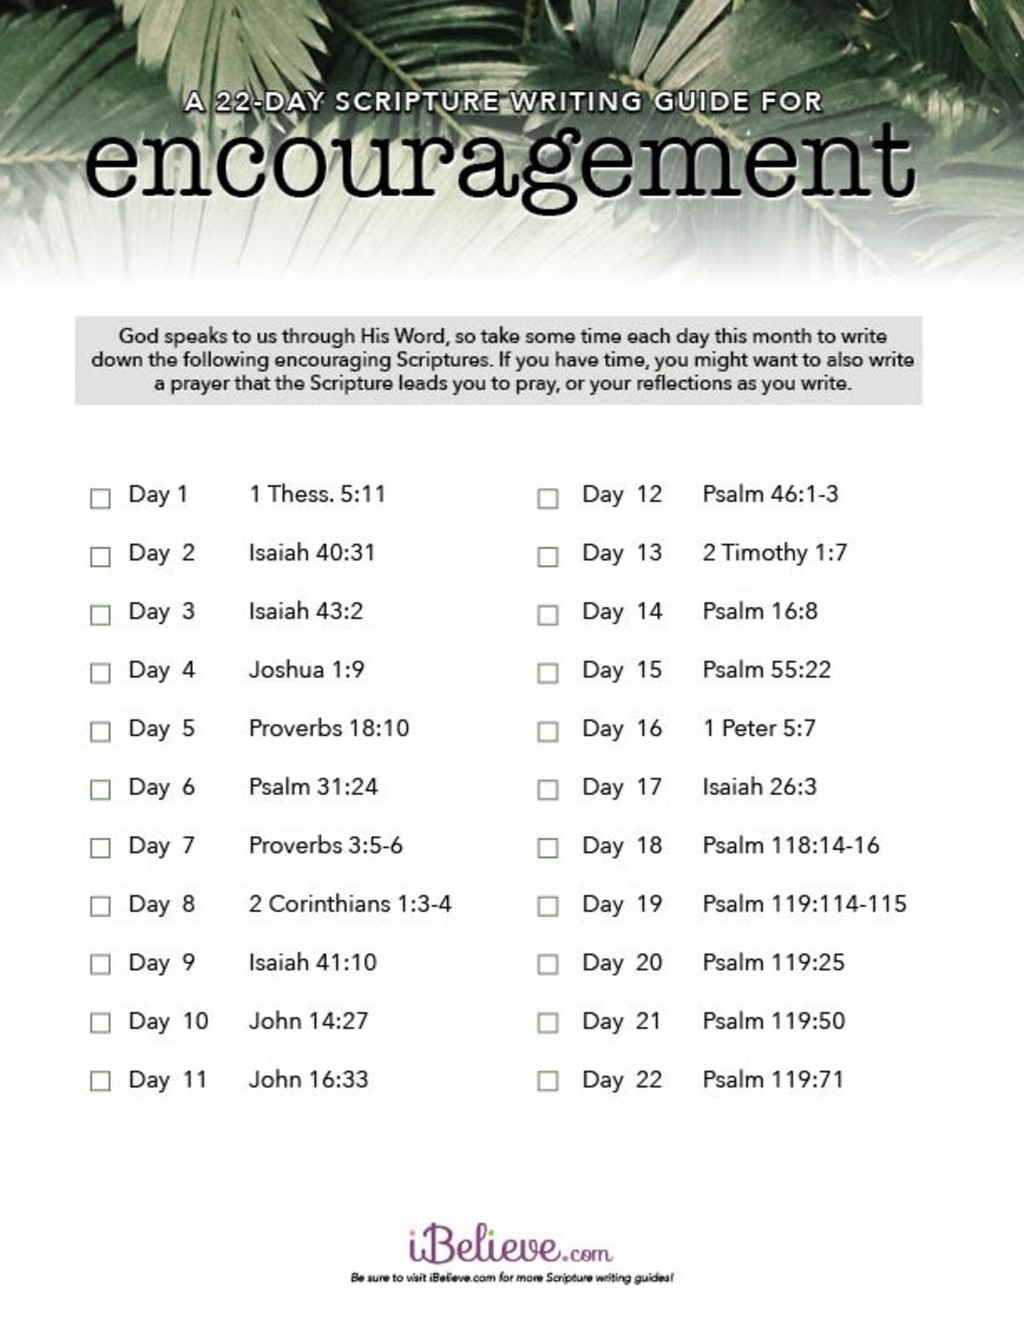 Encouragement Scripture Writing Guide